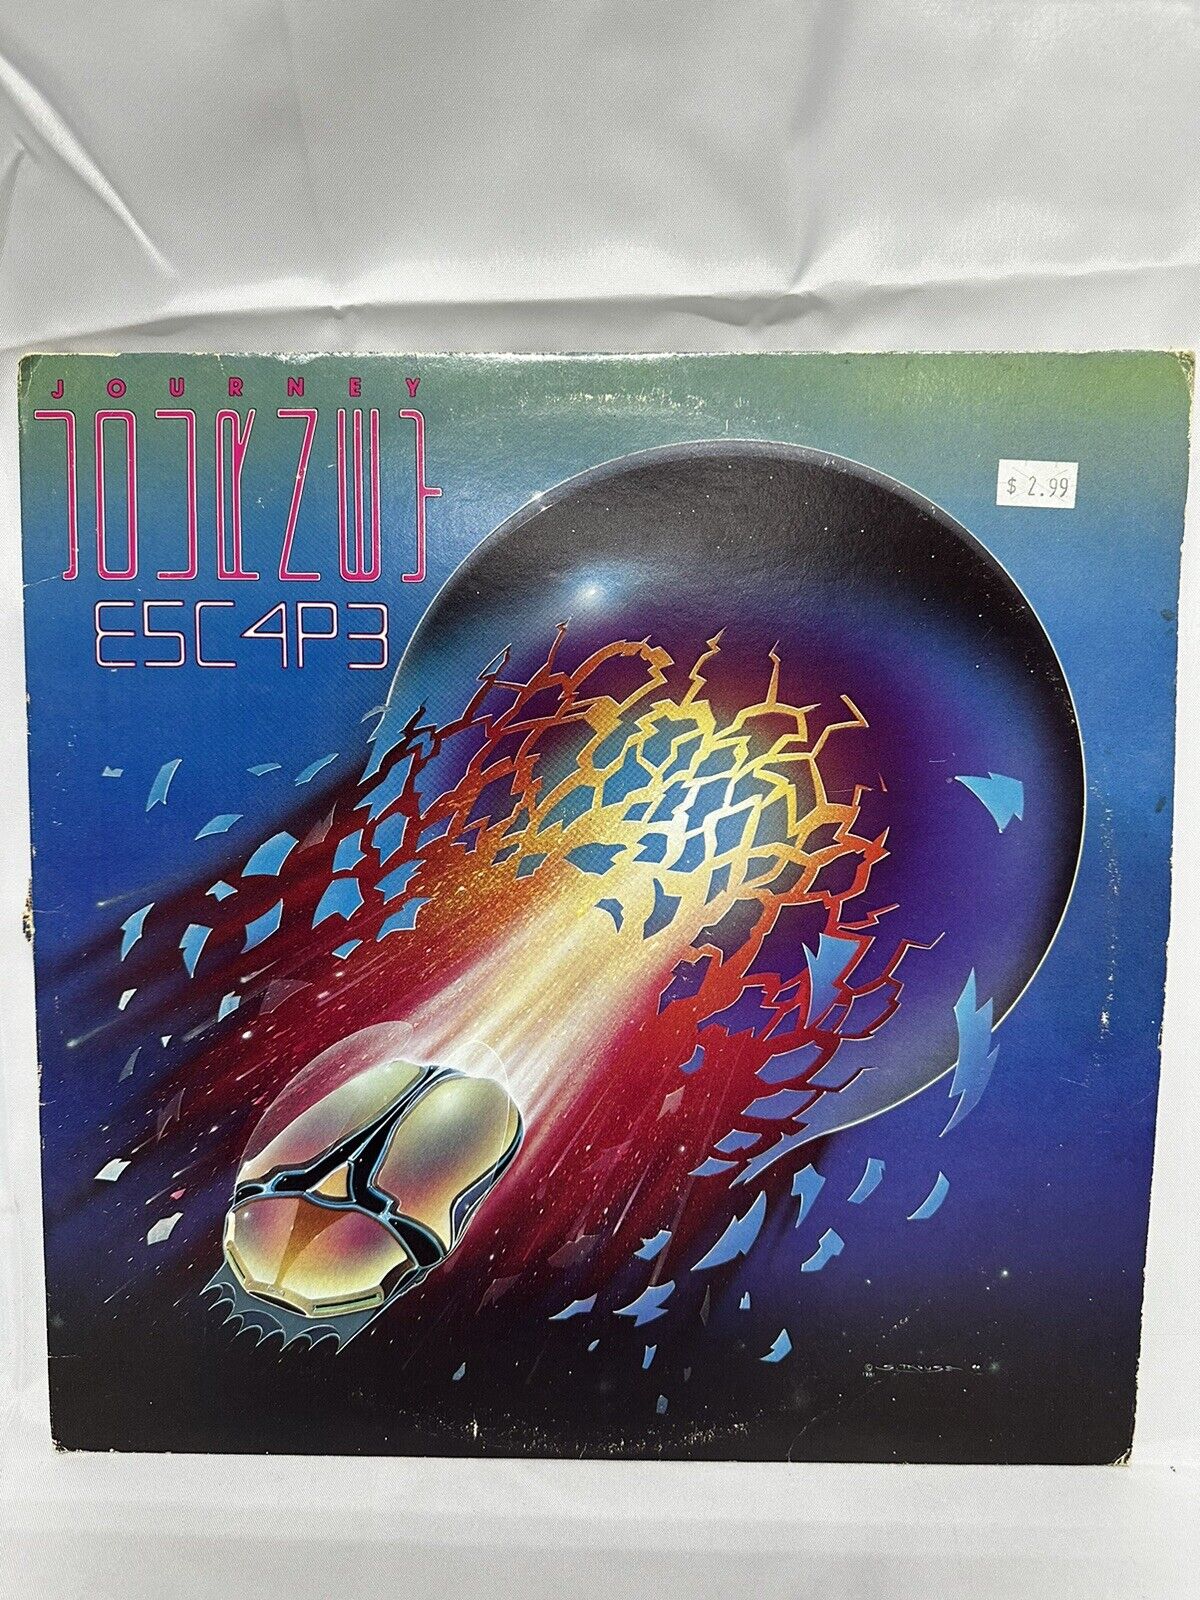 Journey - ESCAPE - Columbia 37408 (1981 LP w/ lyric sleeve